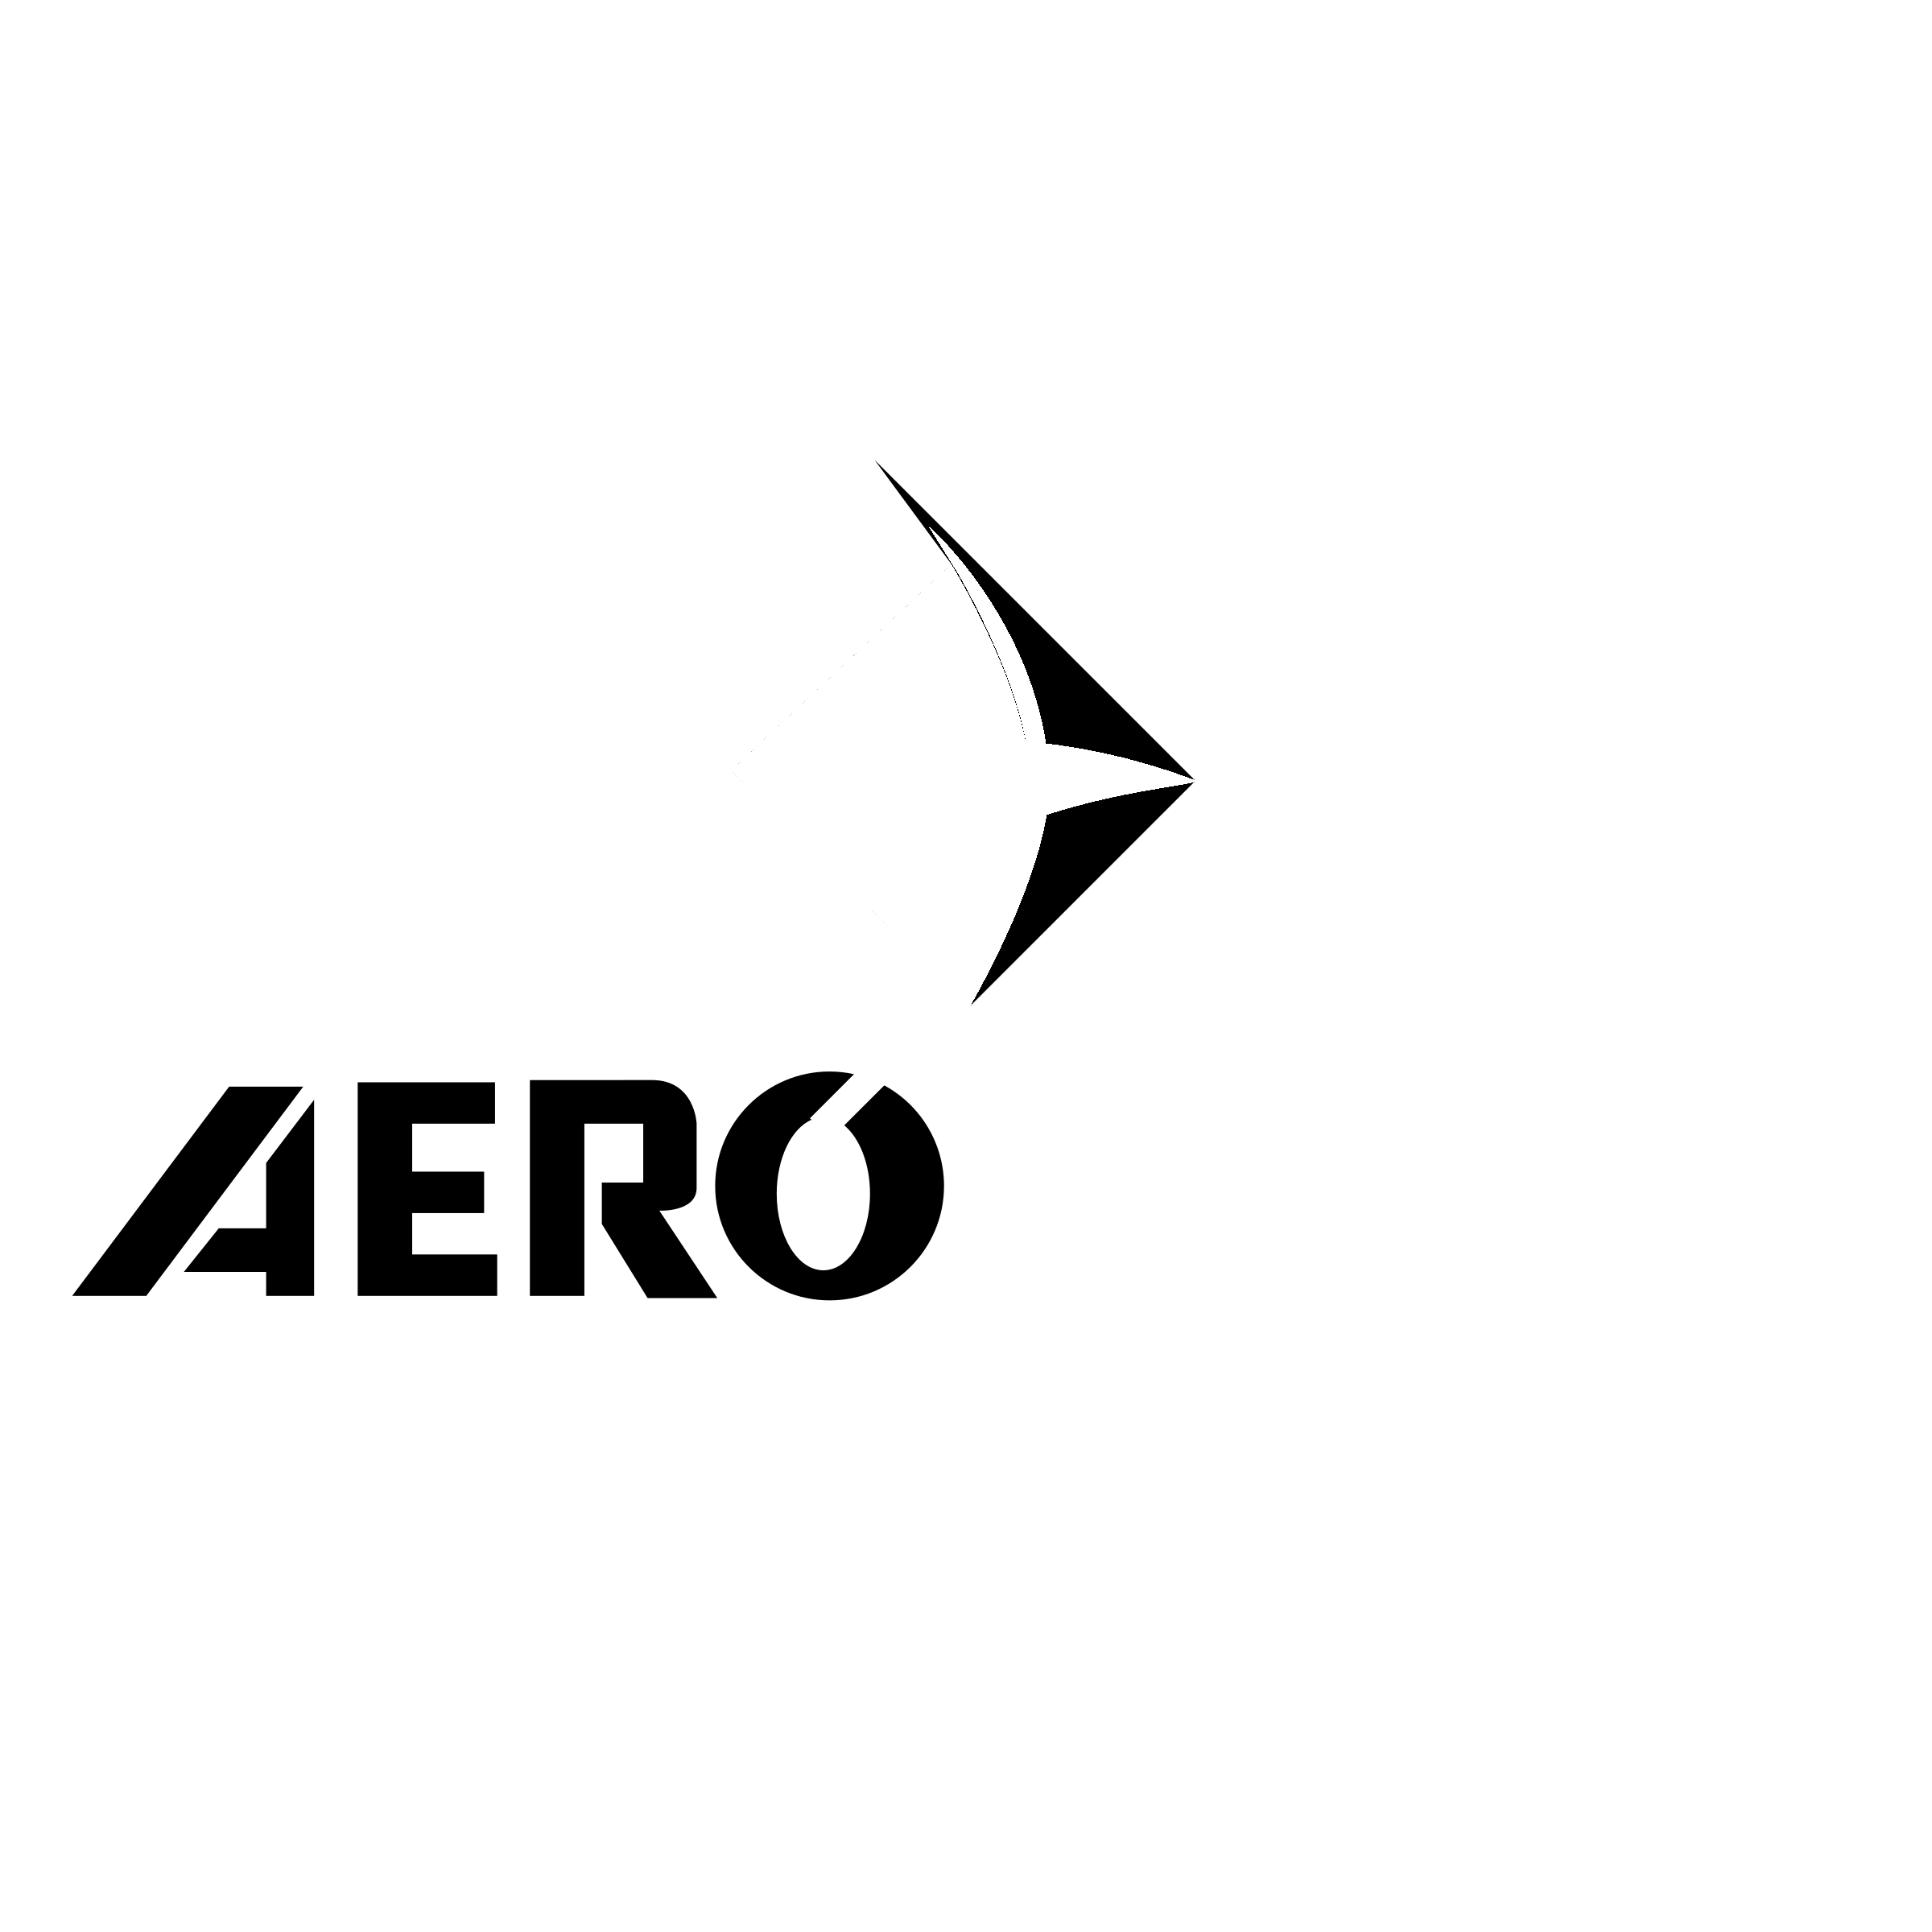 Aero Logo - Aero Lloyd Logo PNG Transparent & SVG Vector